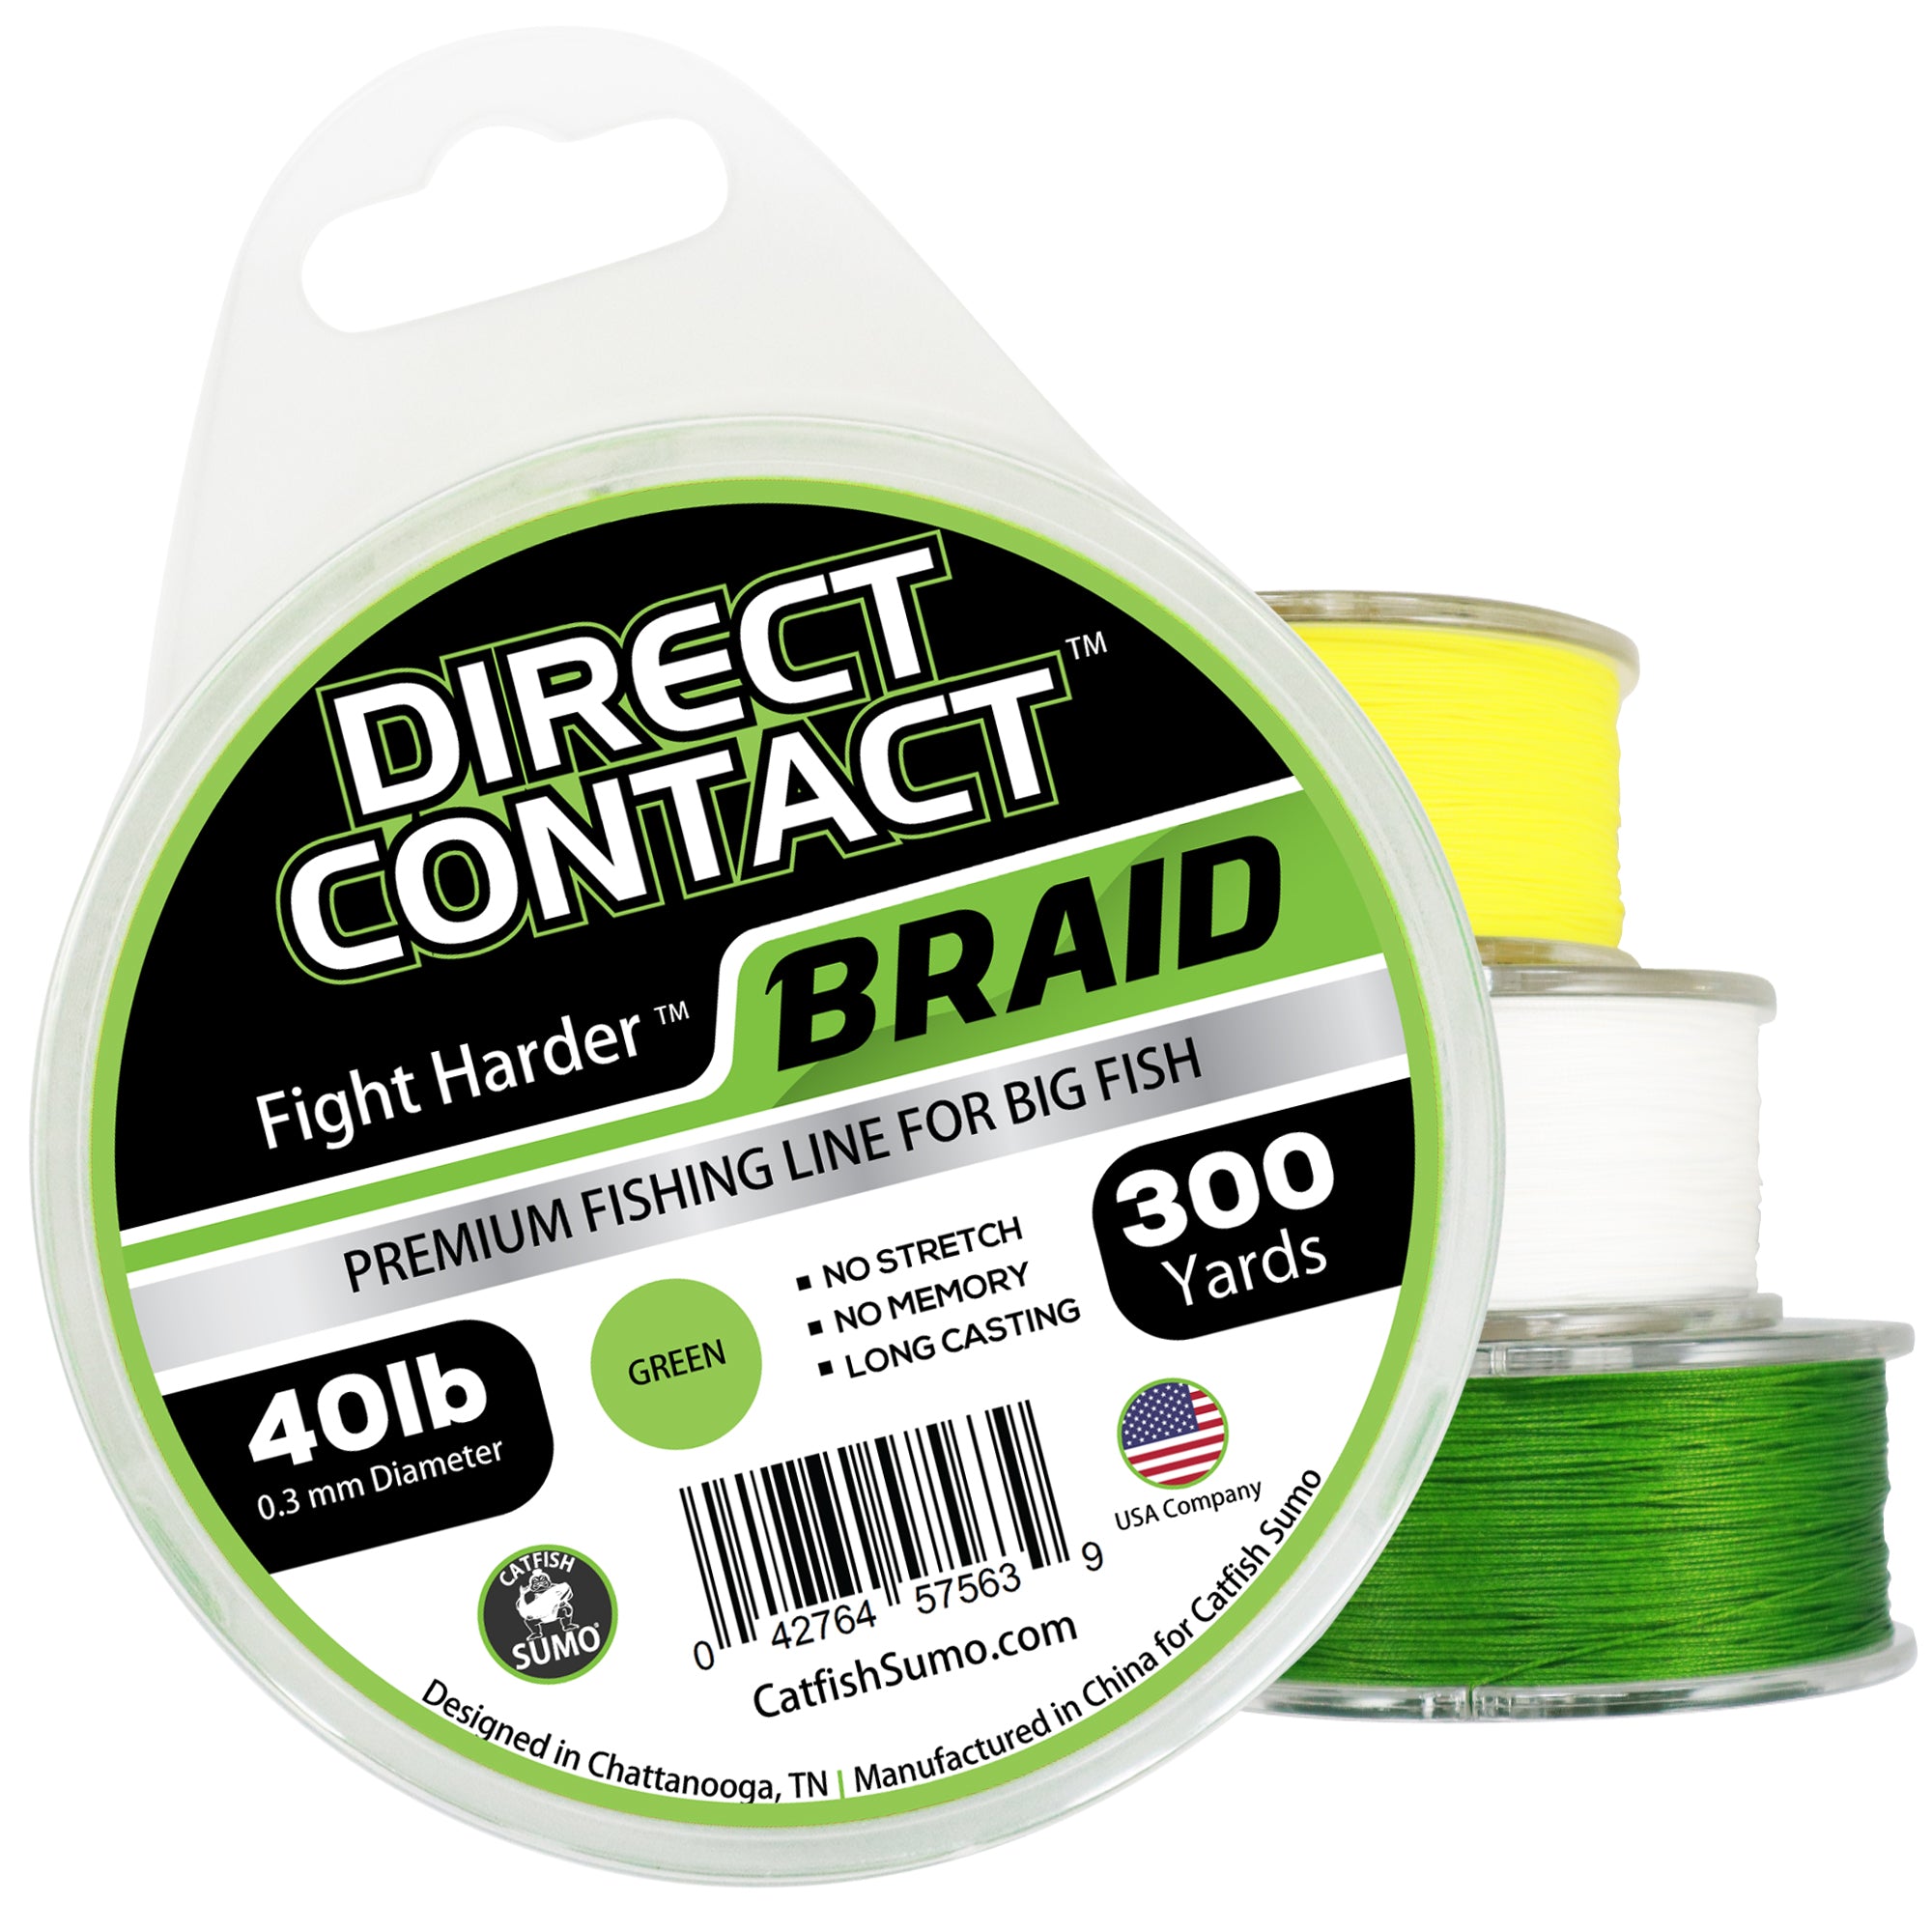 Direct Contact™ Premium Fishing Line for Big Fish, Braid, 300 Yard Spool -  40lb / Sumo Green